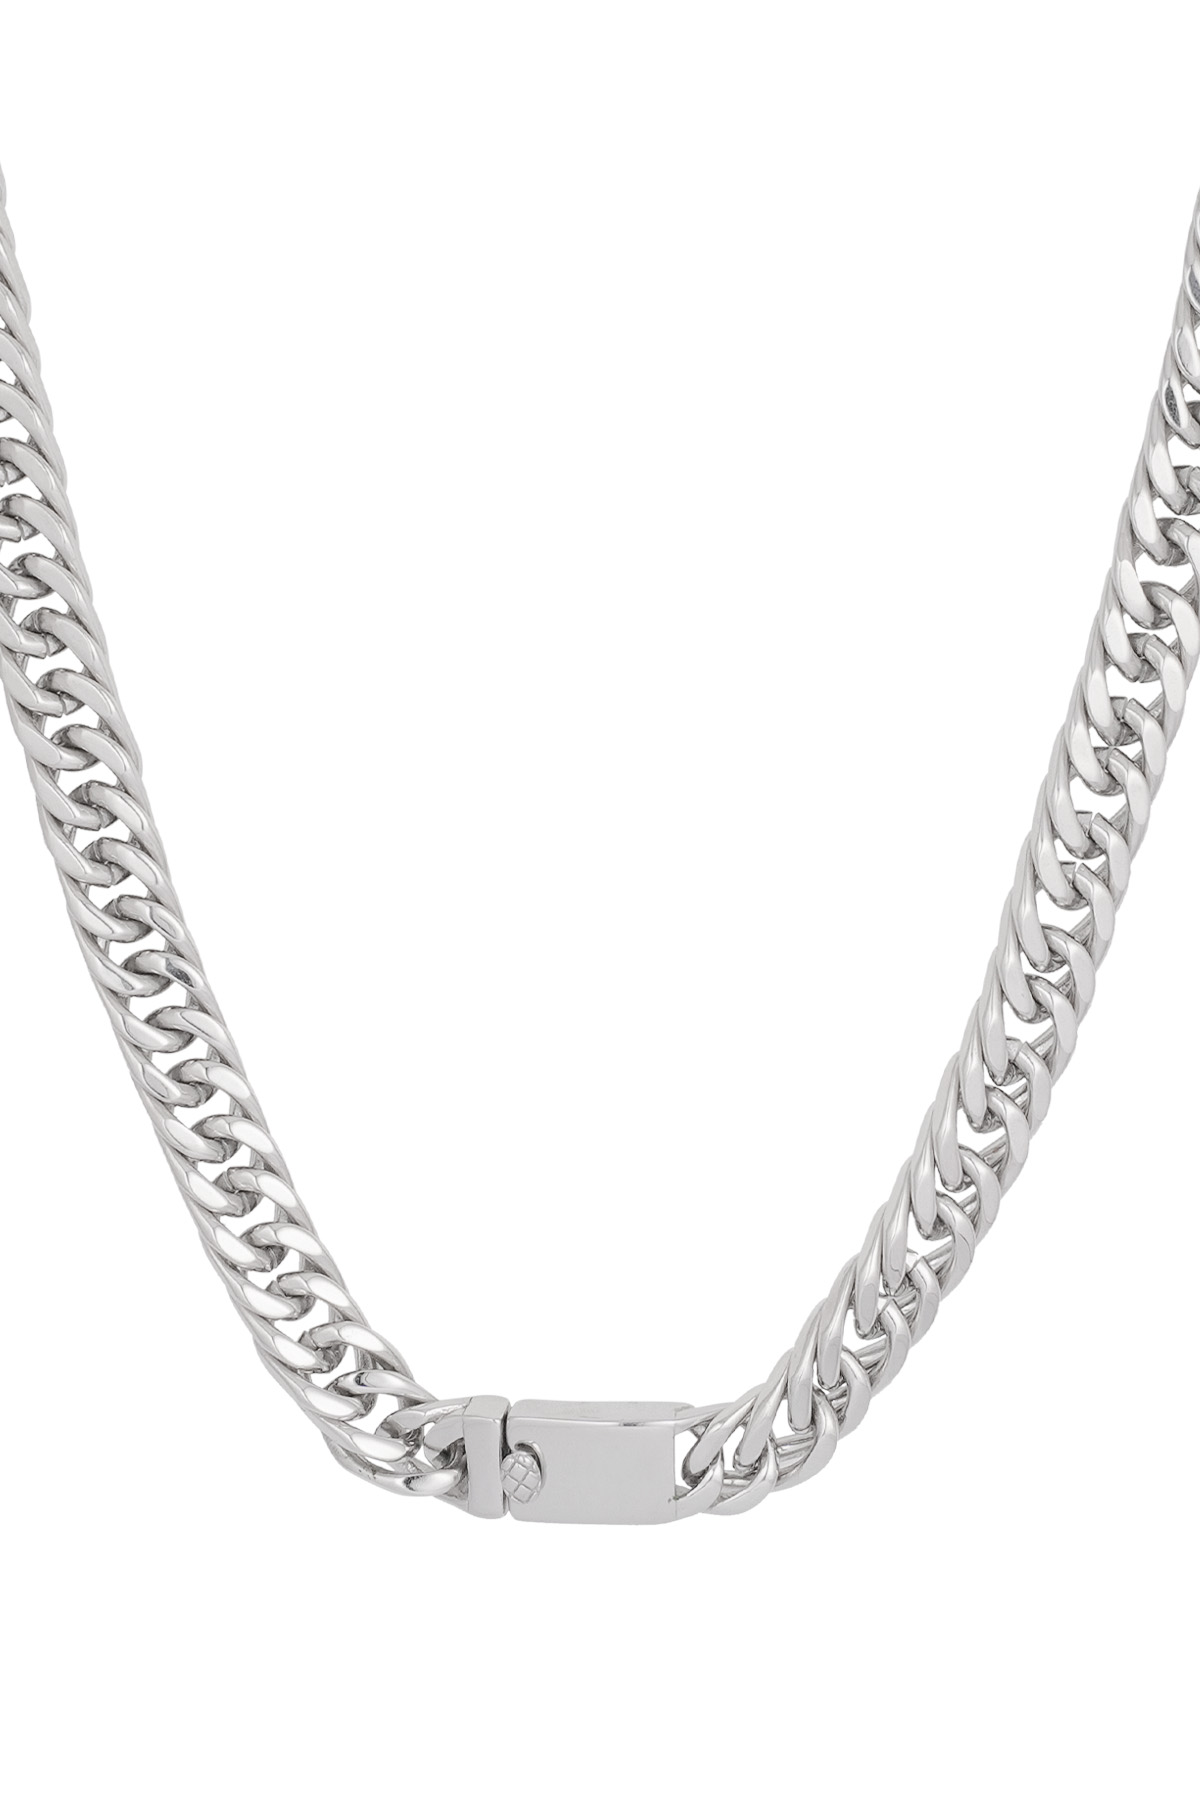 Men's chain necklace - silver h5 Picture5